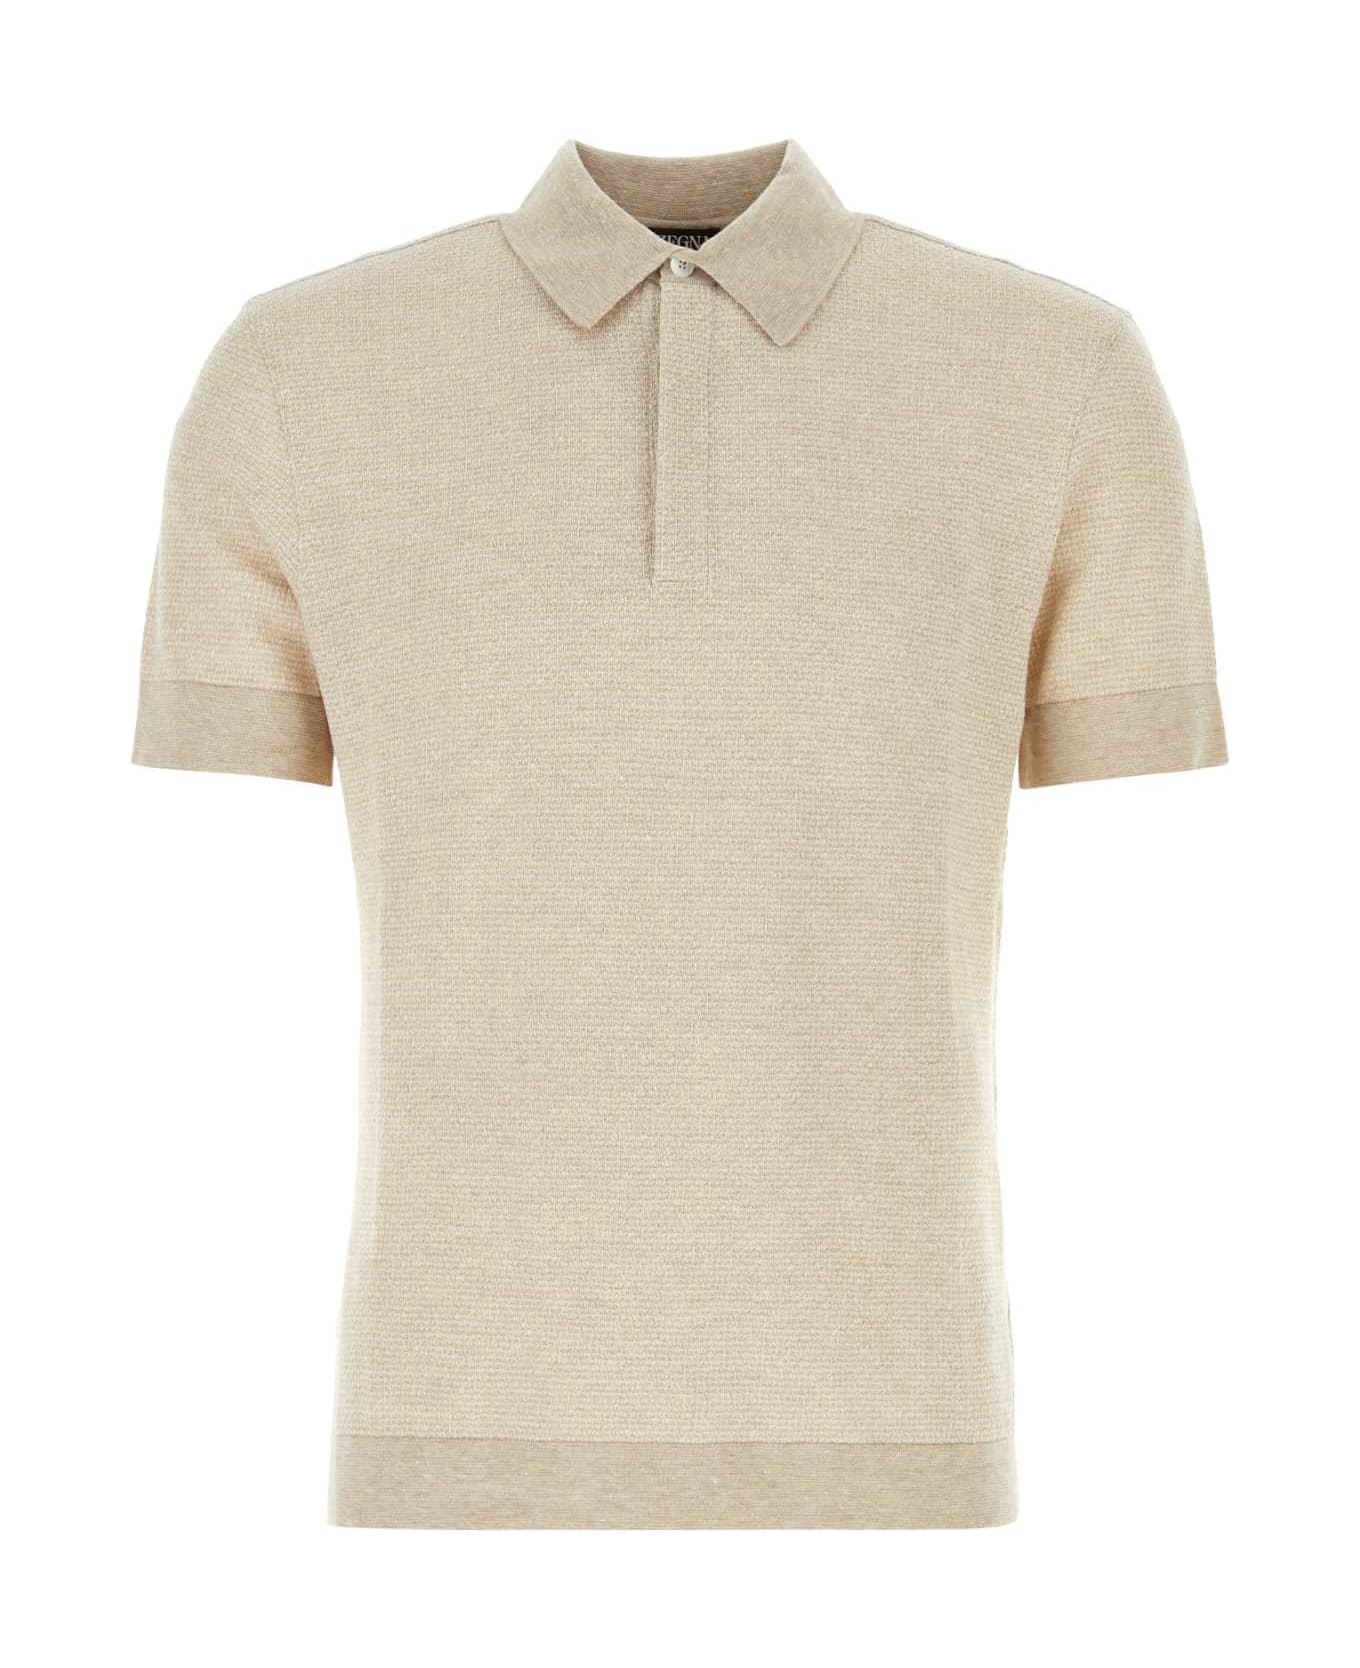 Zegna Sand Cotton Blend Polo Shirt - N03